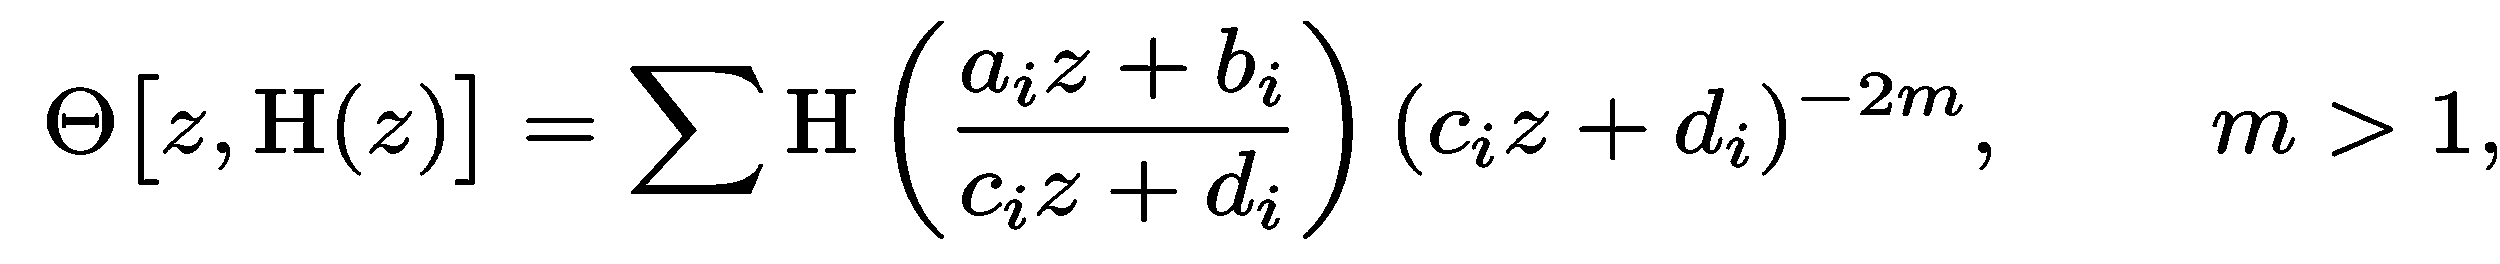 [Grec: Theta] [z, H(z)] =  [sum] H  ((a_{i}z + b_{i})/( c_{i}z + d_{i}))(c_{i}z + d_{i})^{2m},  m>1,